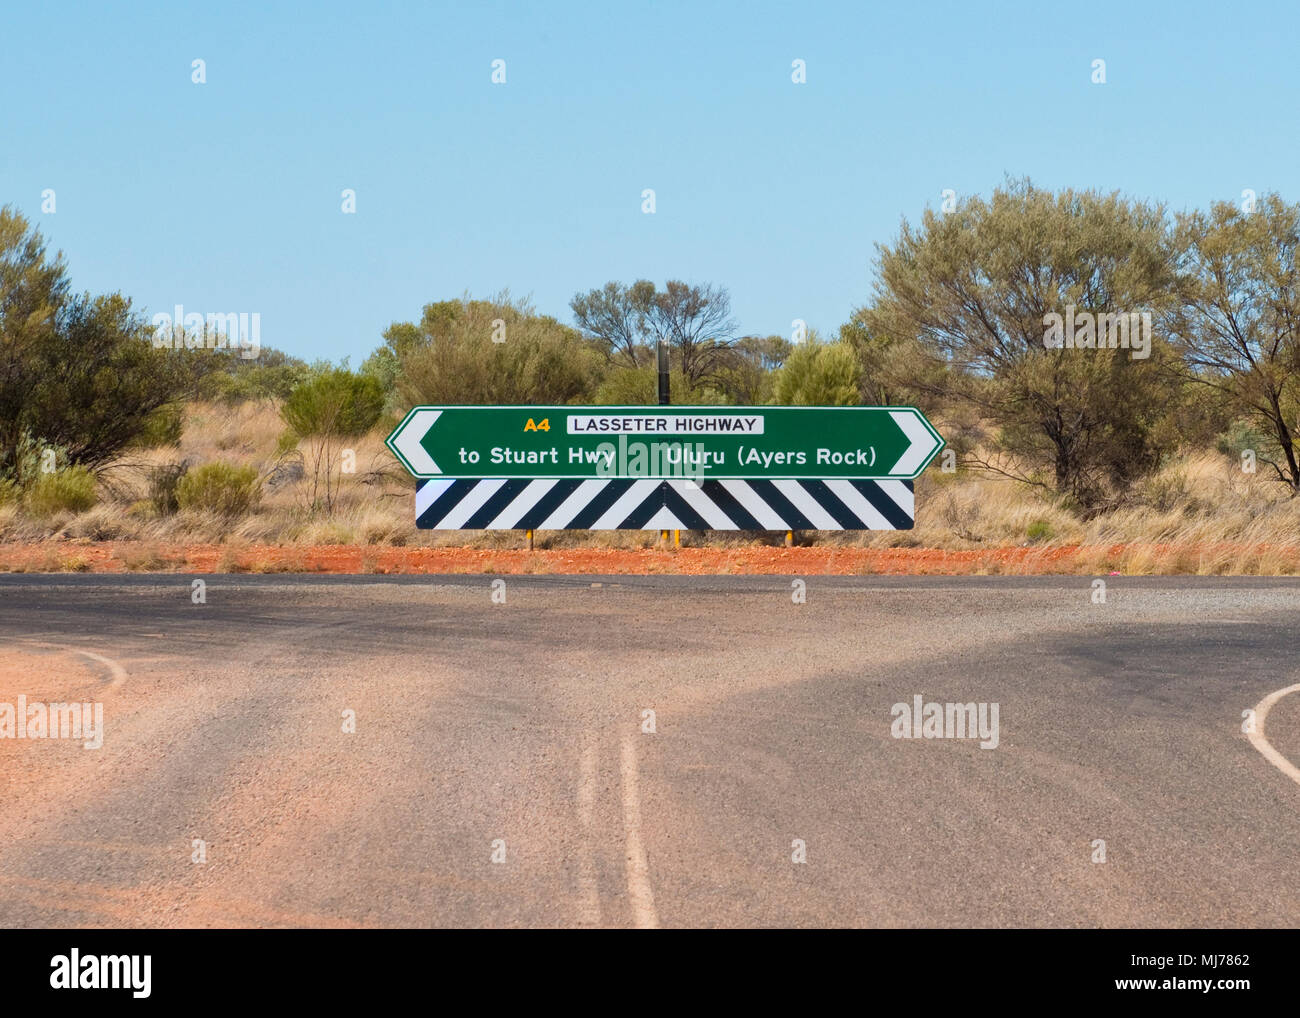 Lasseter Highway road sign directions à Stuart Highway et Uluru (Ayers Rock) Banque D'Images